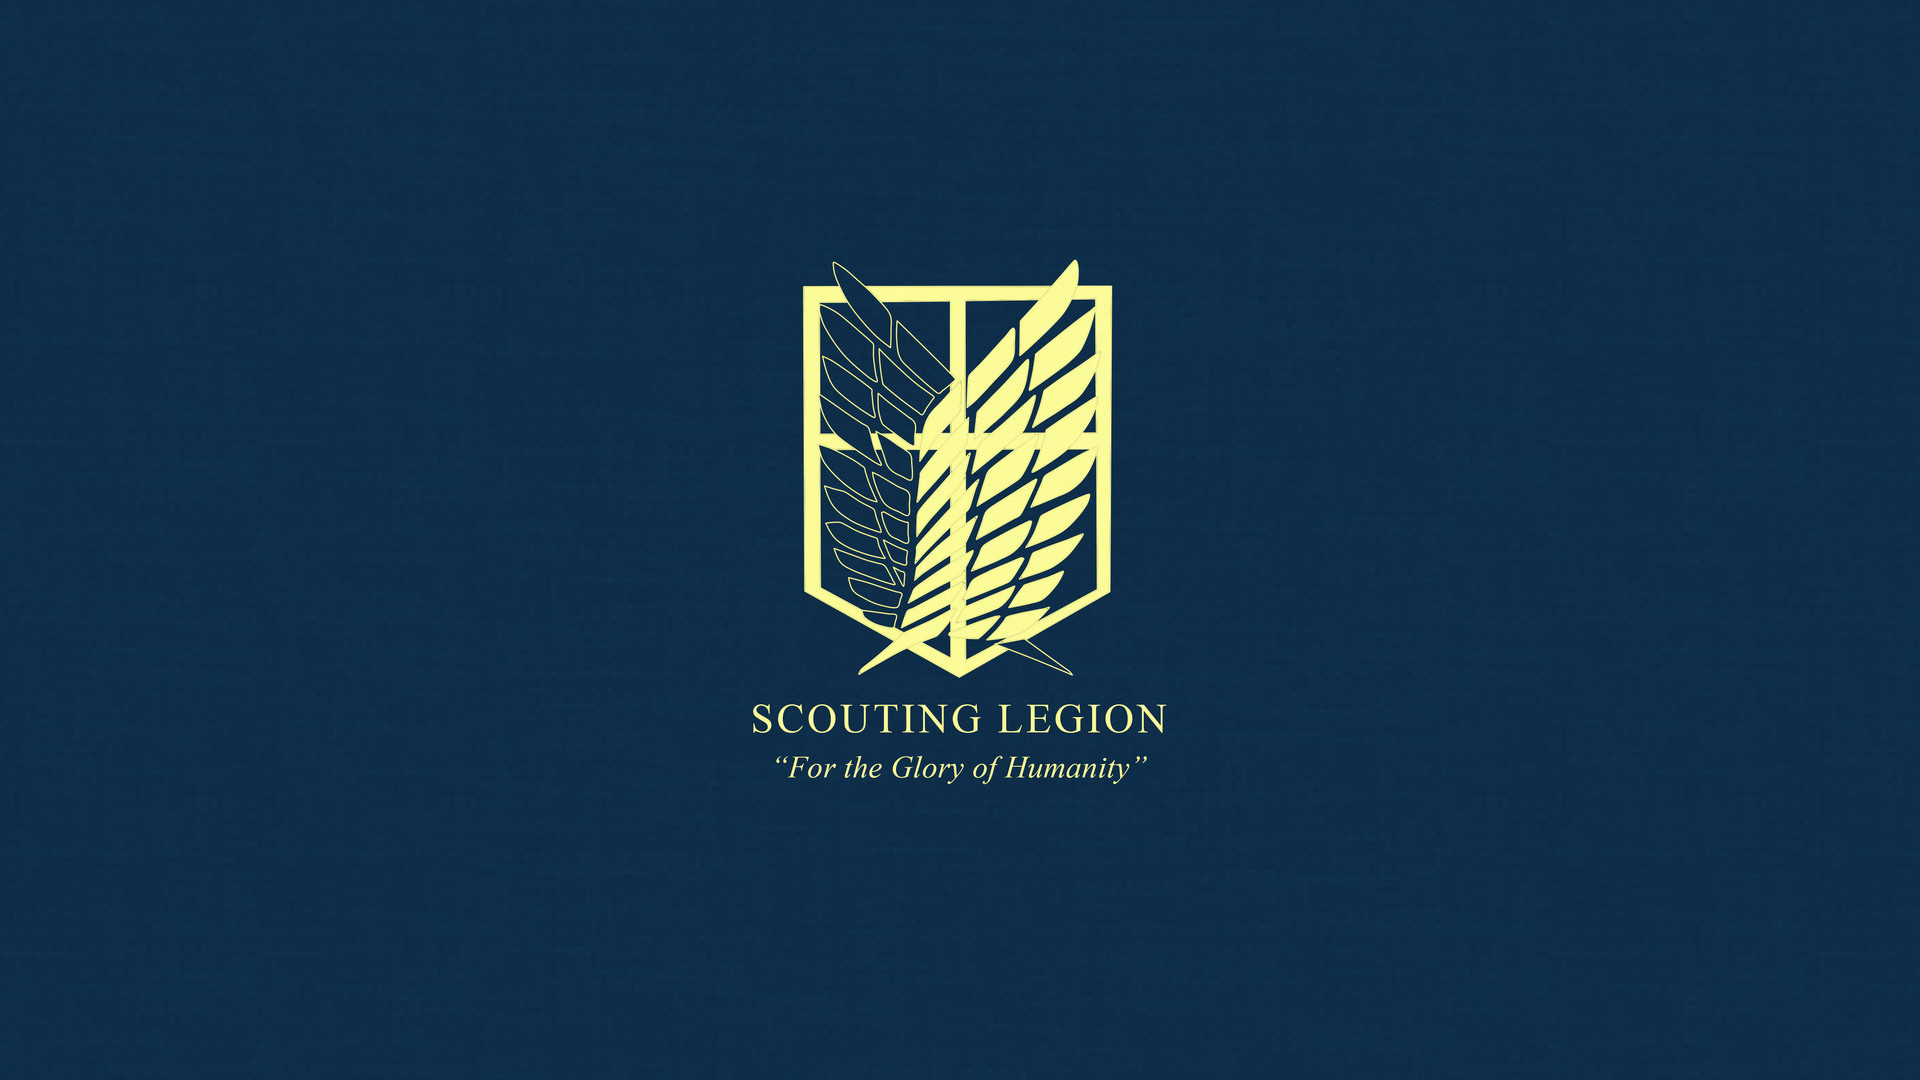 1920x1080 ... Attack on Titan: Scouting Legion Wallpaper by Imxset21